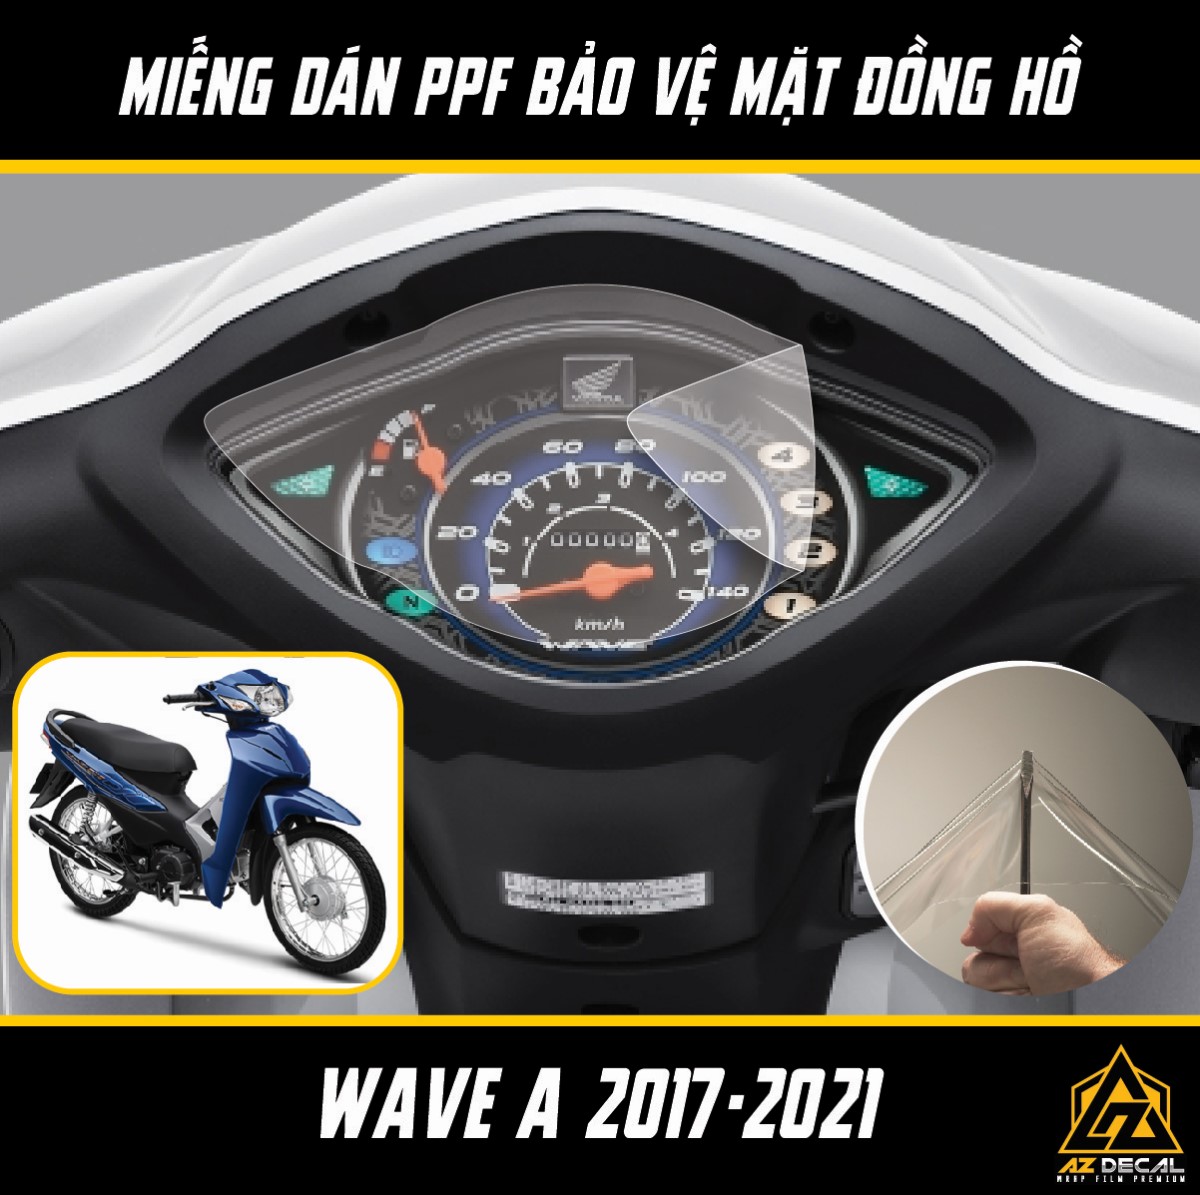 Honda Wave Alpha 110 2021  Đen Bóng Bạc  Walkaround  YouTube